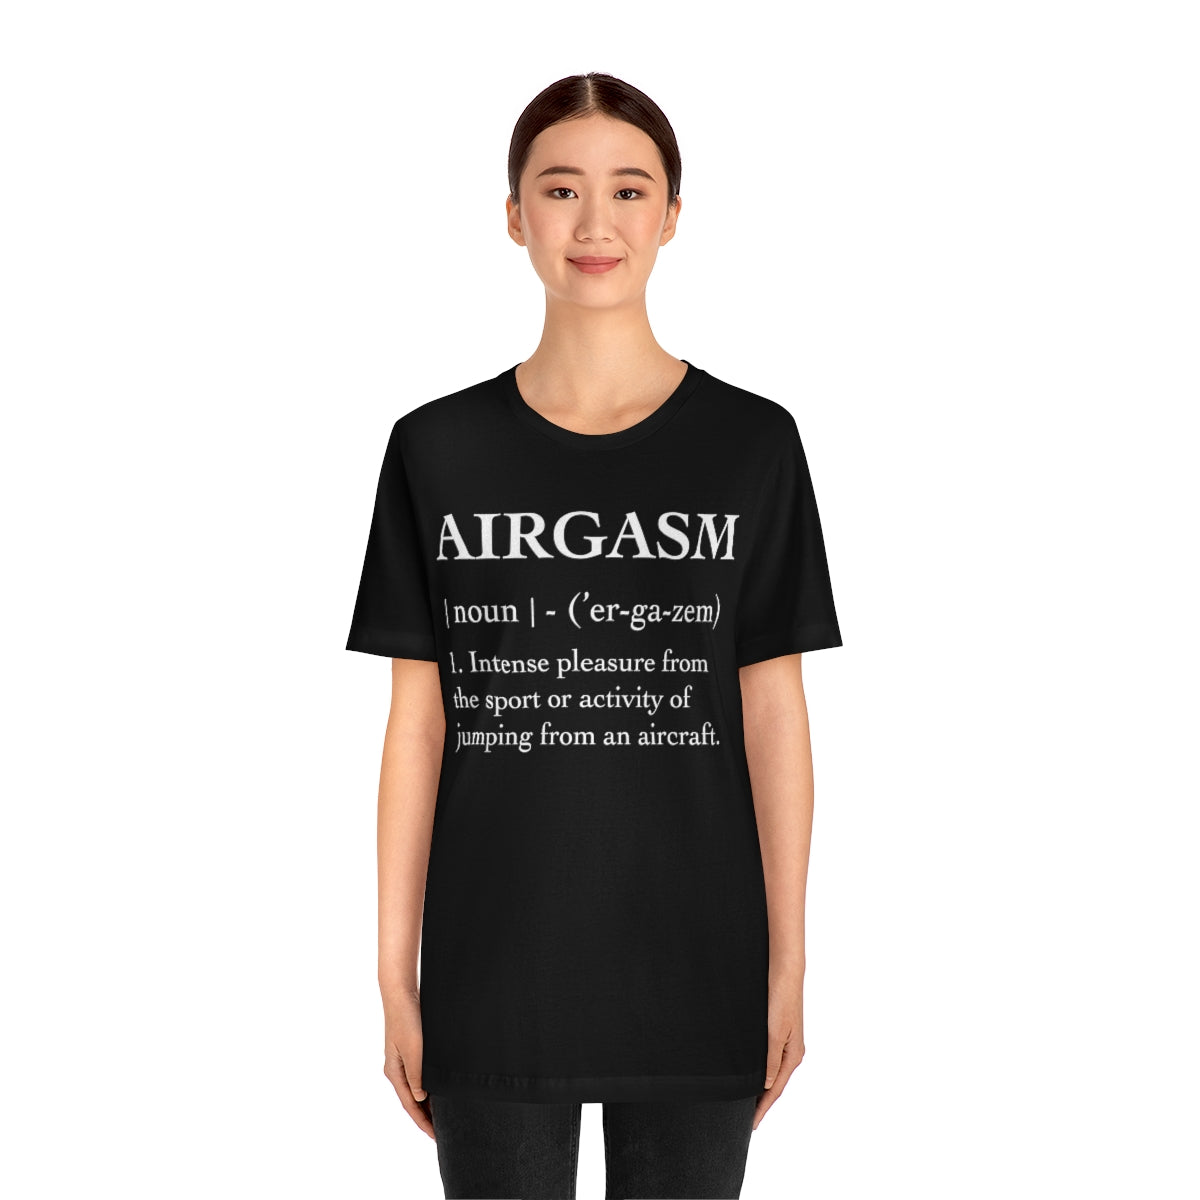 AIRGASM T-Shirt